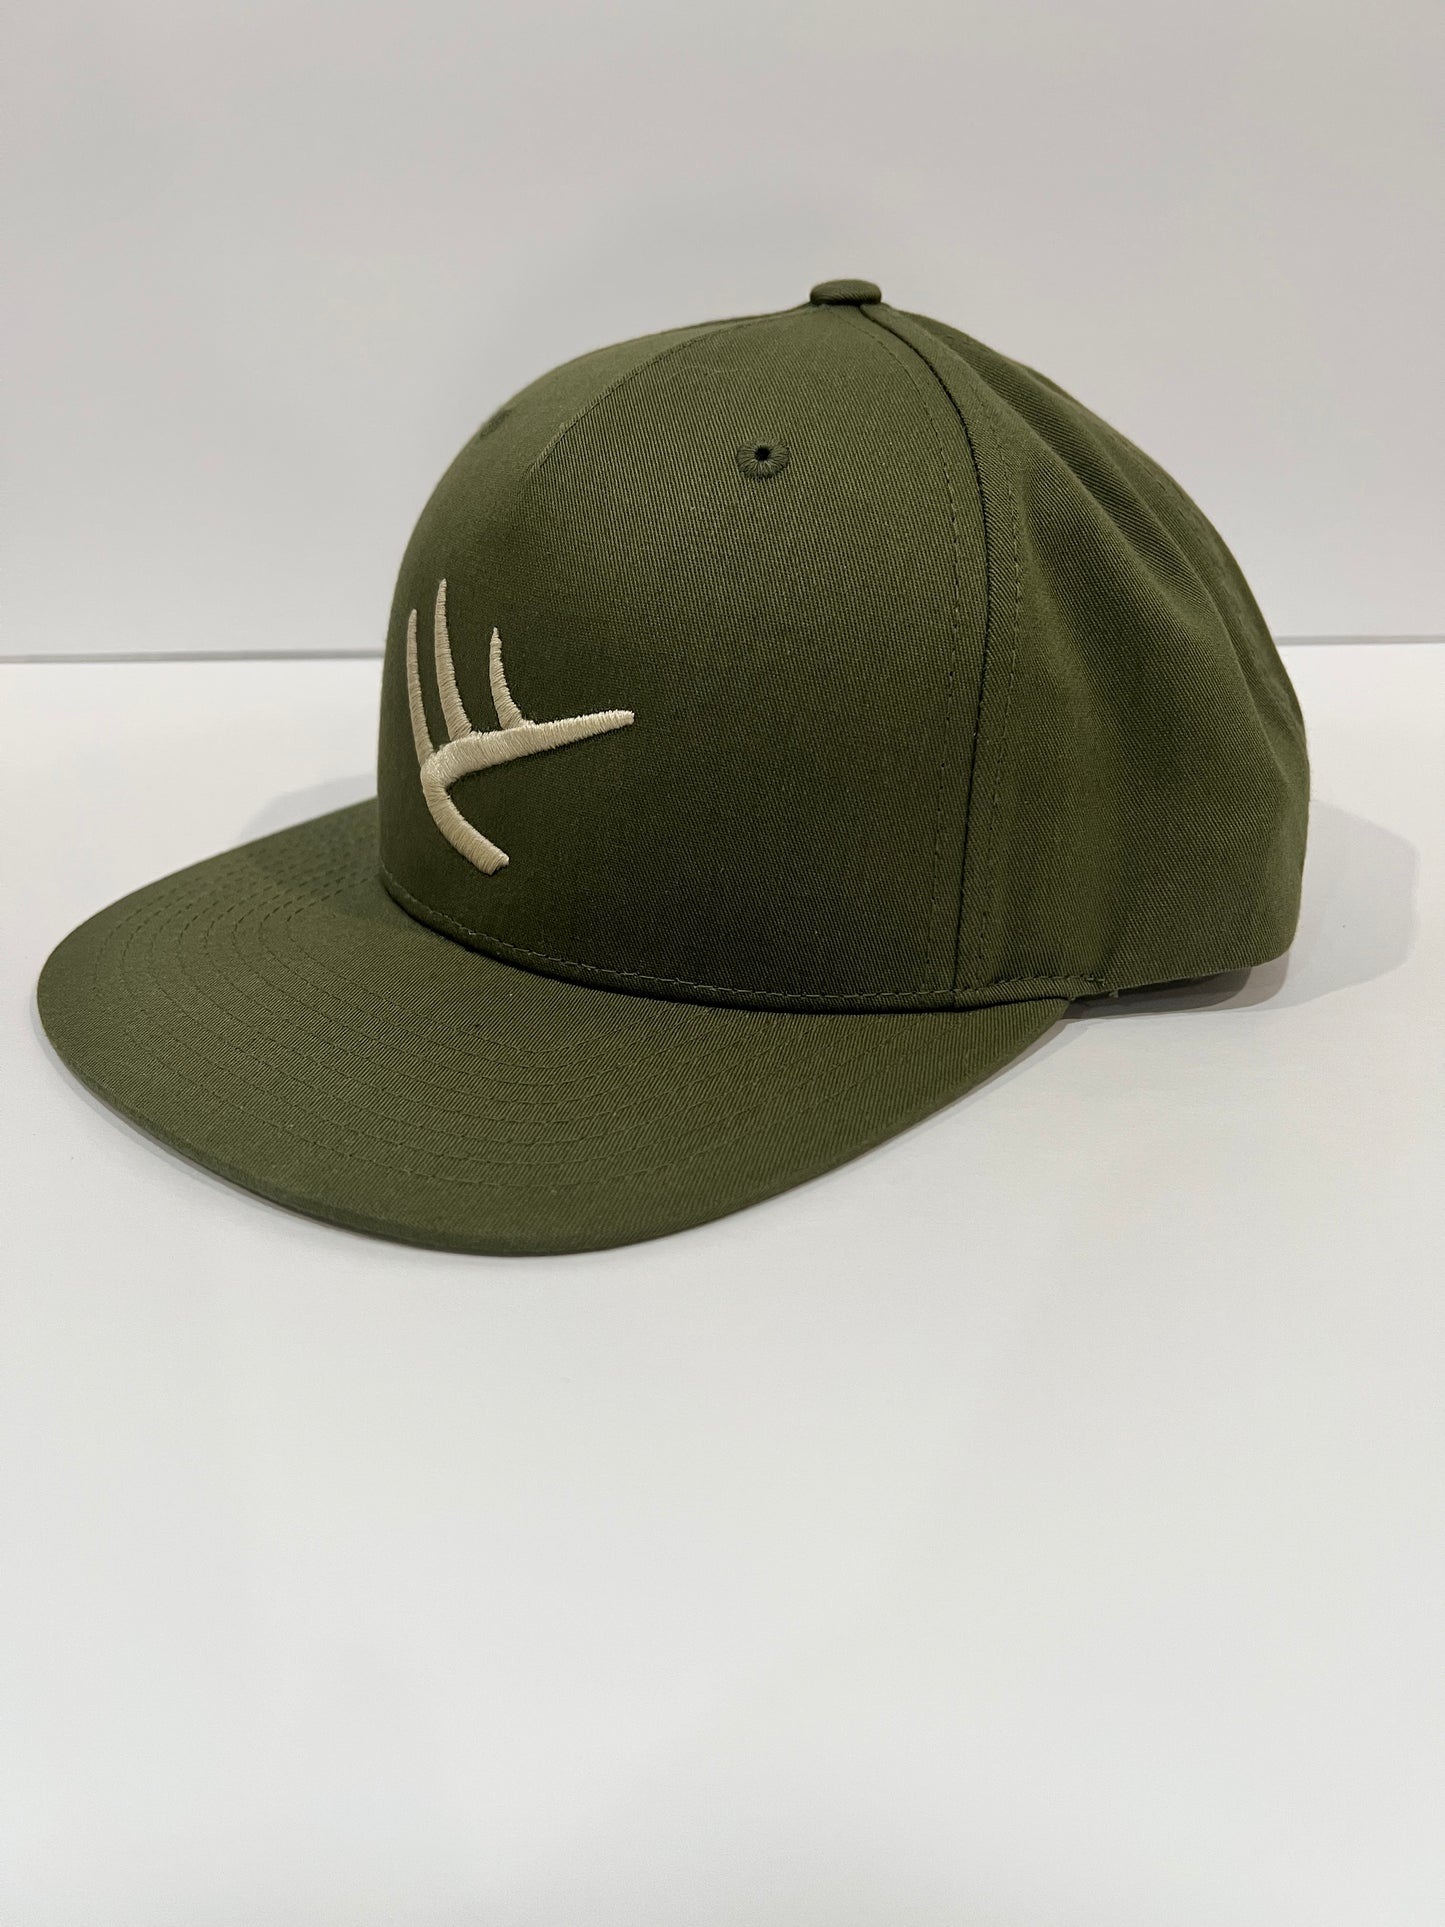 Richardson 255 Limited Edition Hats